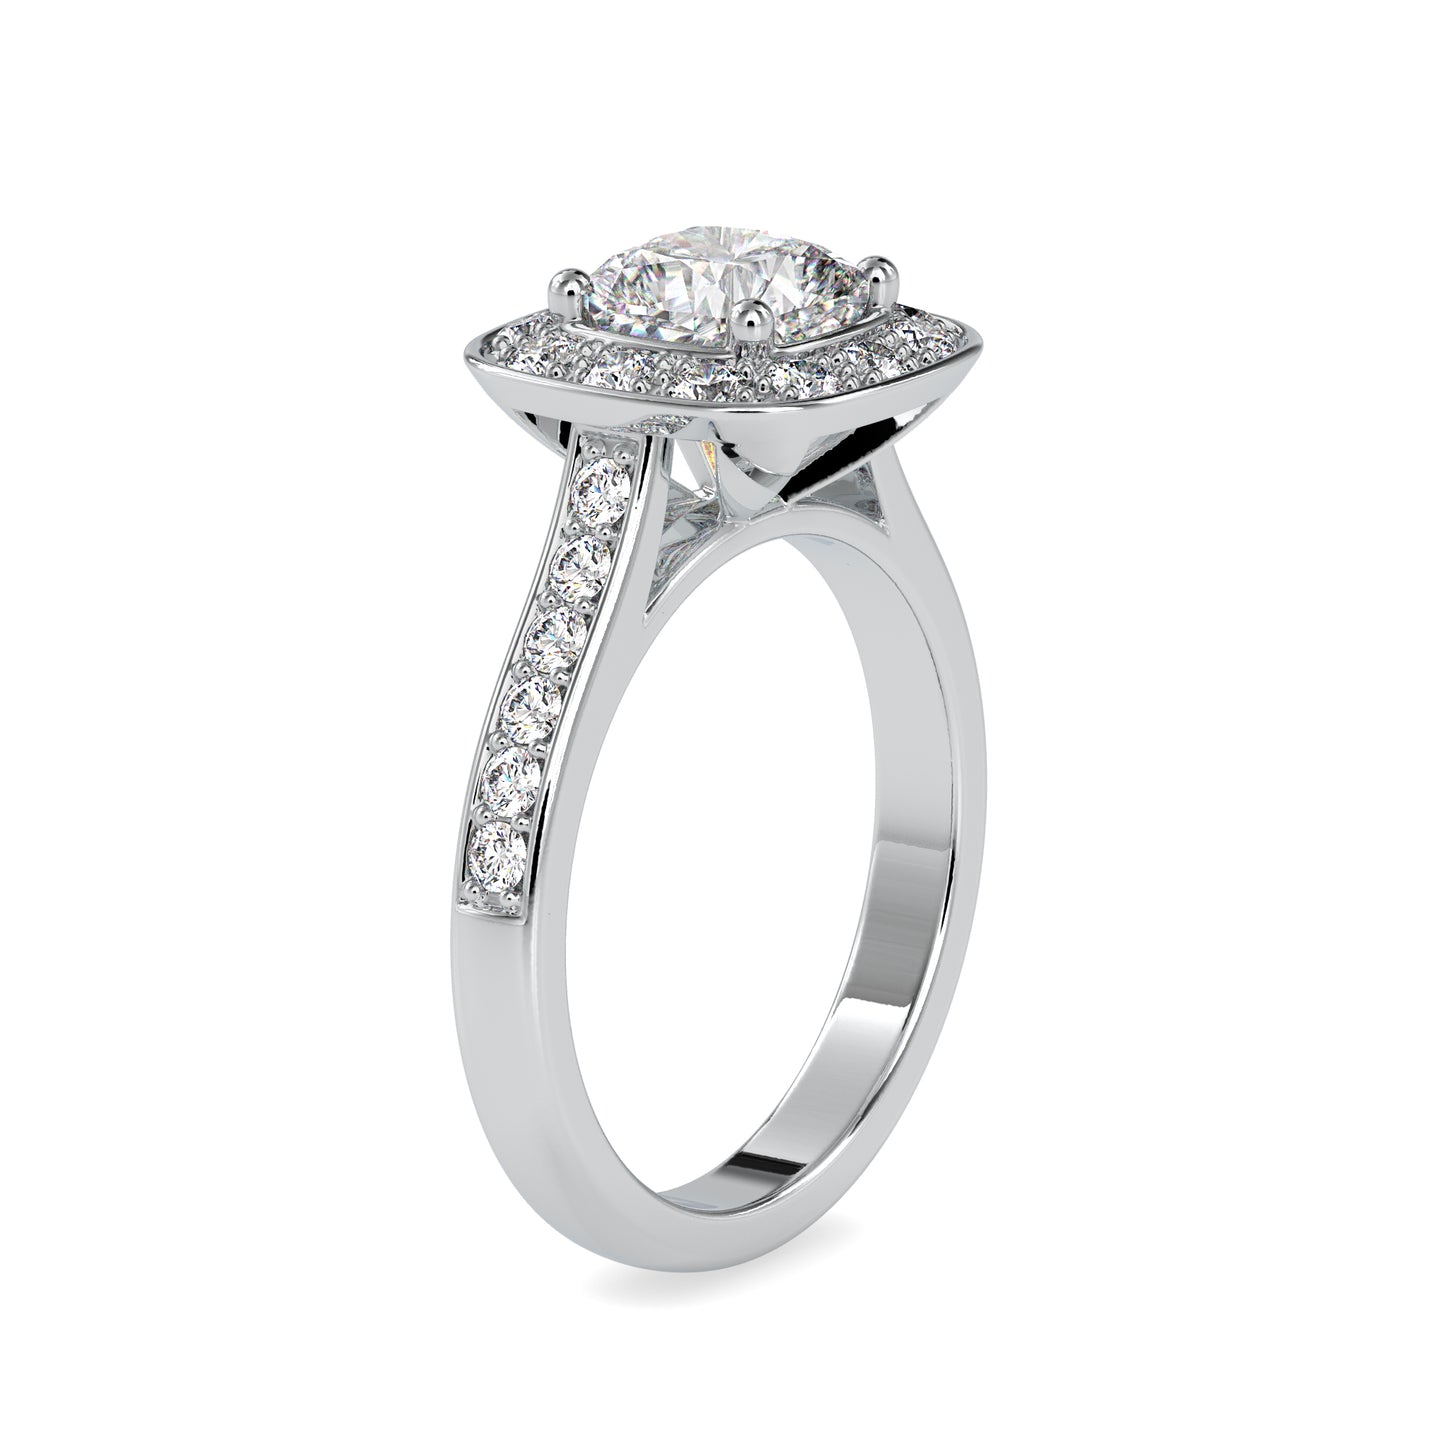 The Fabia Ring Moissanite Diamond